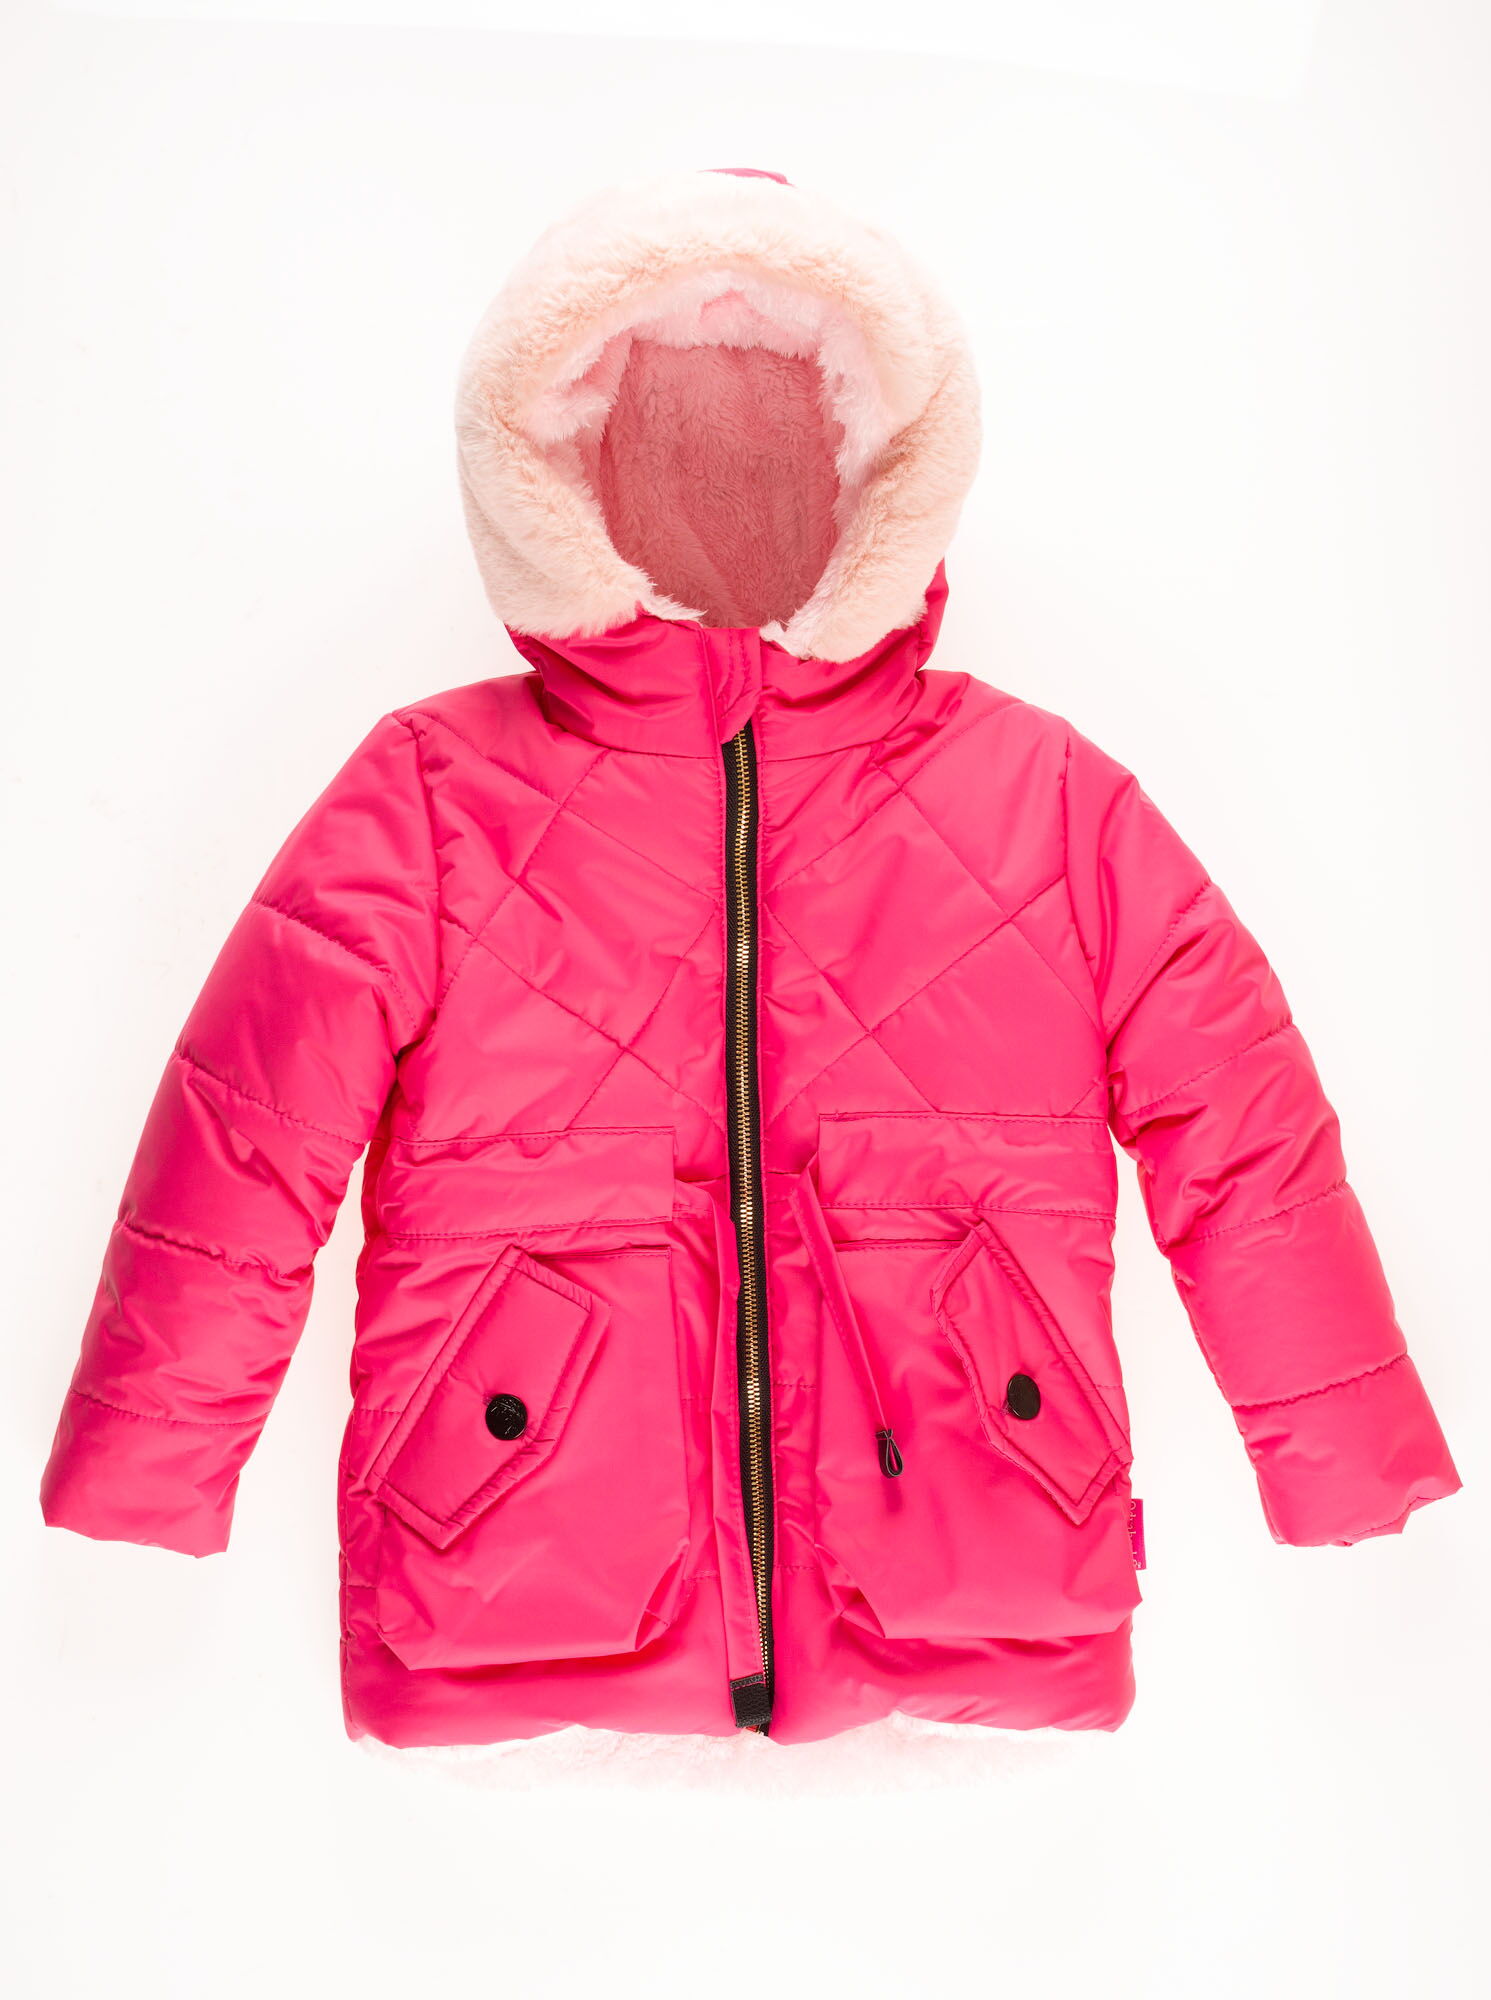 Куртка зимняя для девочки Одягайко малиновая 20019 - цена